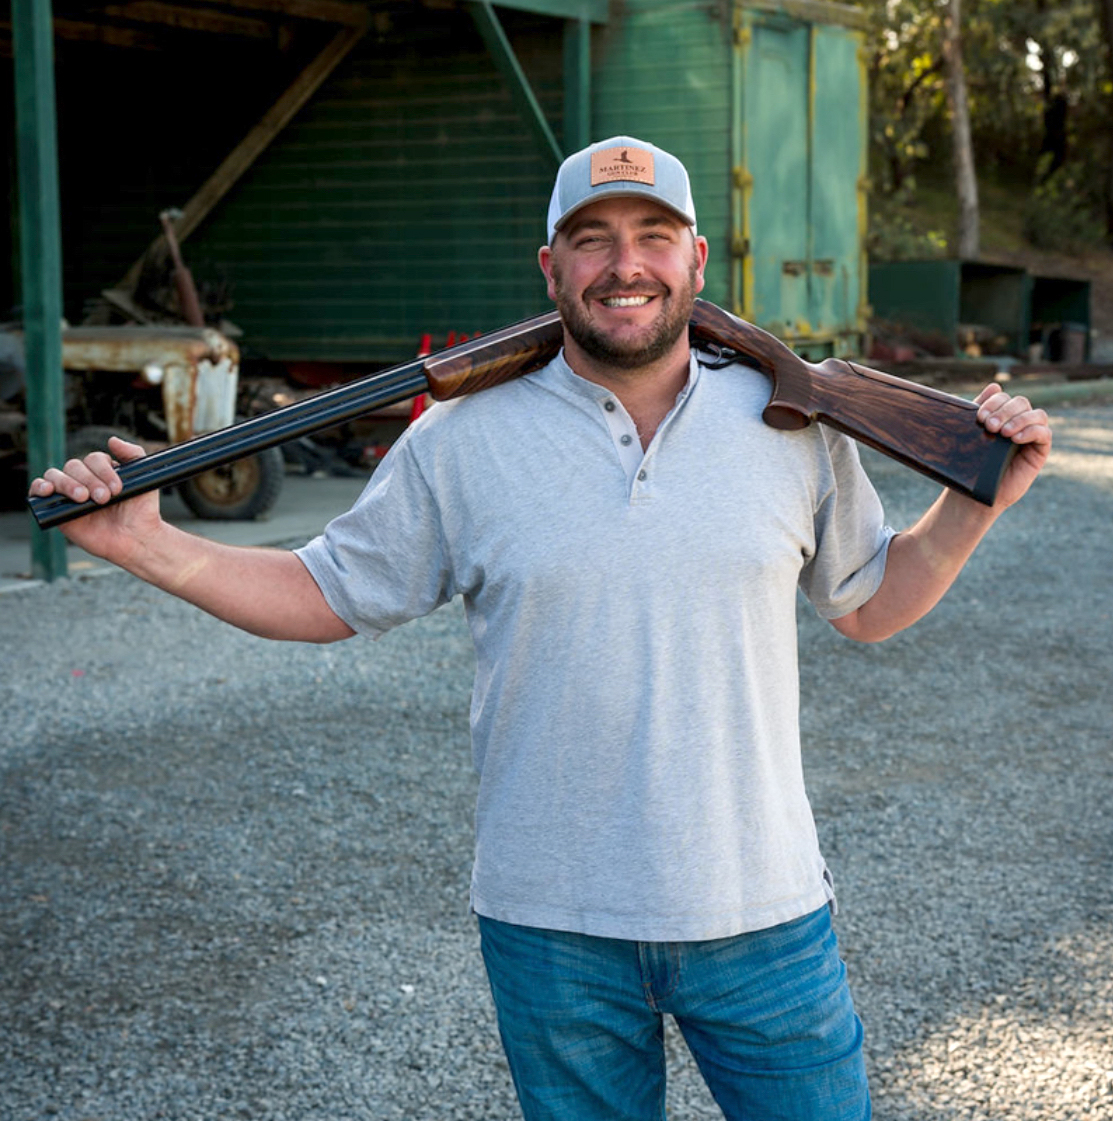 Blake Fahmie can be seen posing with a firearm on a farm.